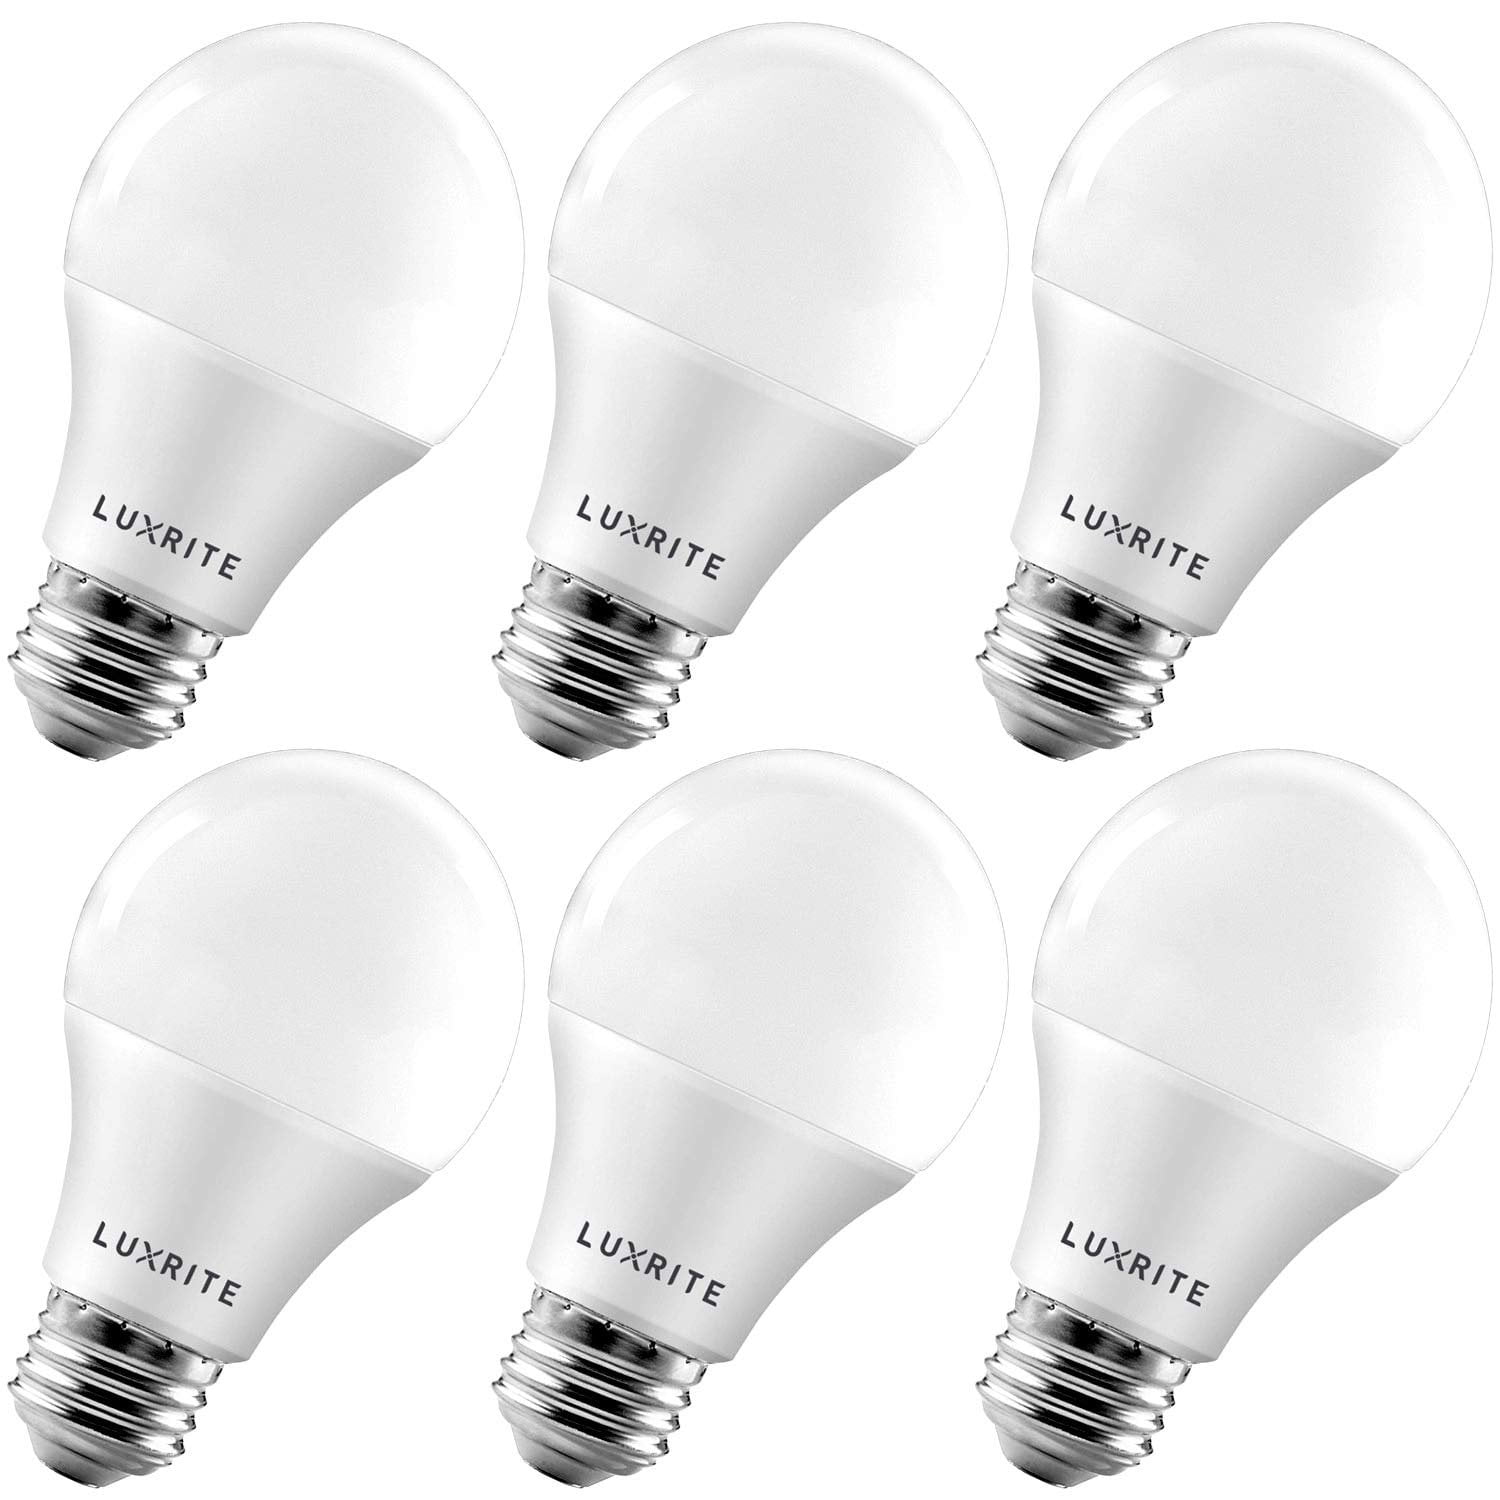 A19 LED 800 Lumen Light Bulb 2700K Warm White 6.5W 60W Equivalent E26 2-Pack 